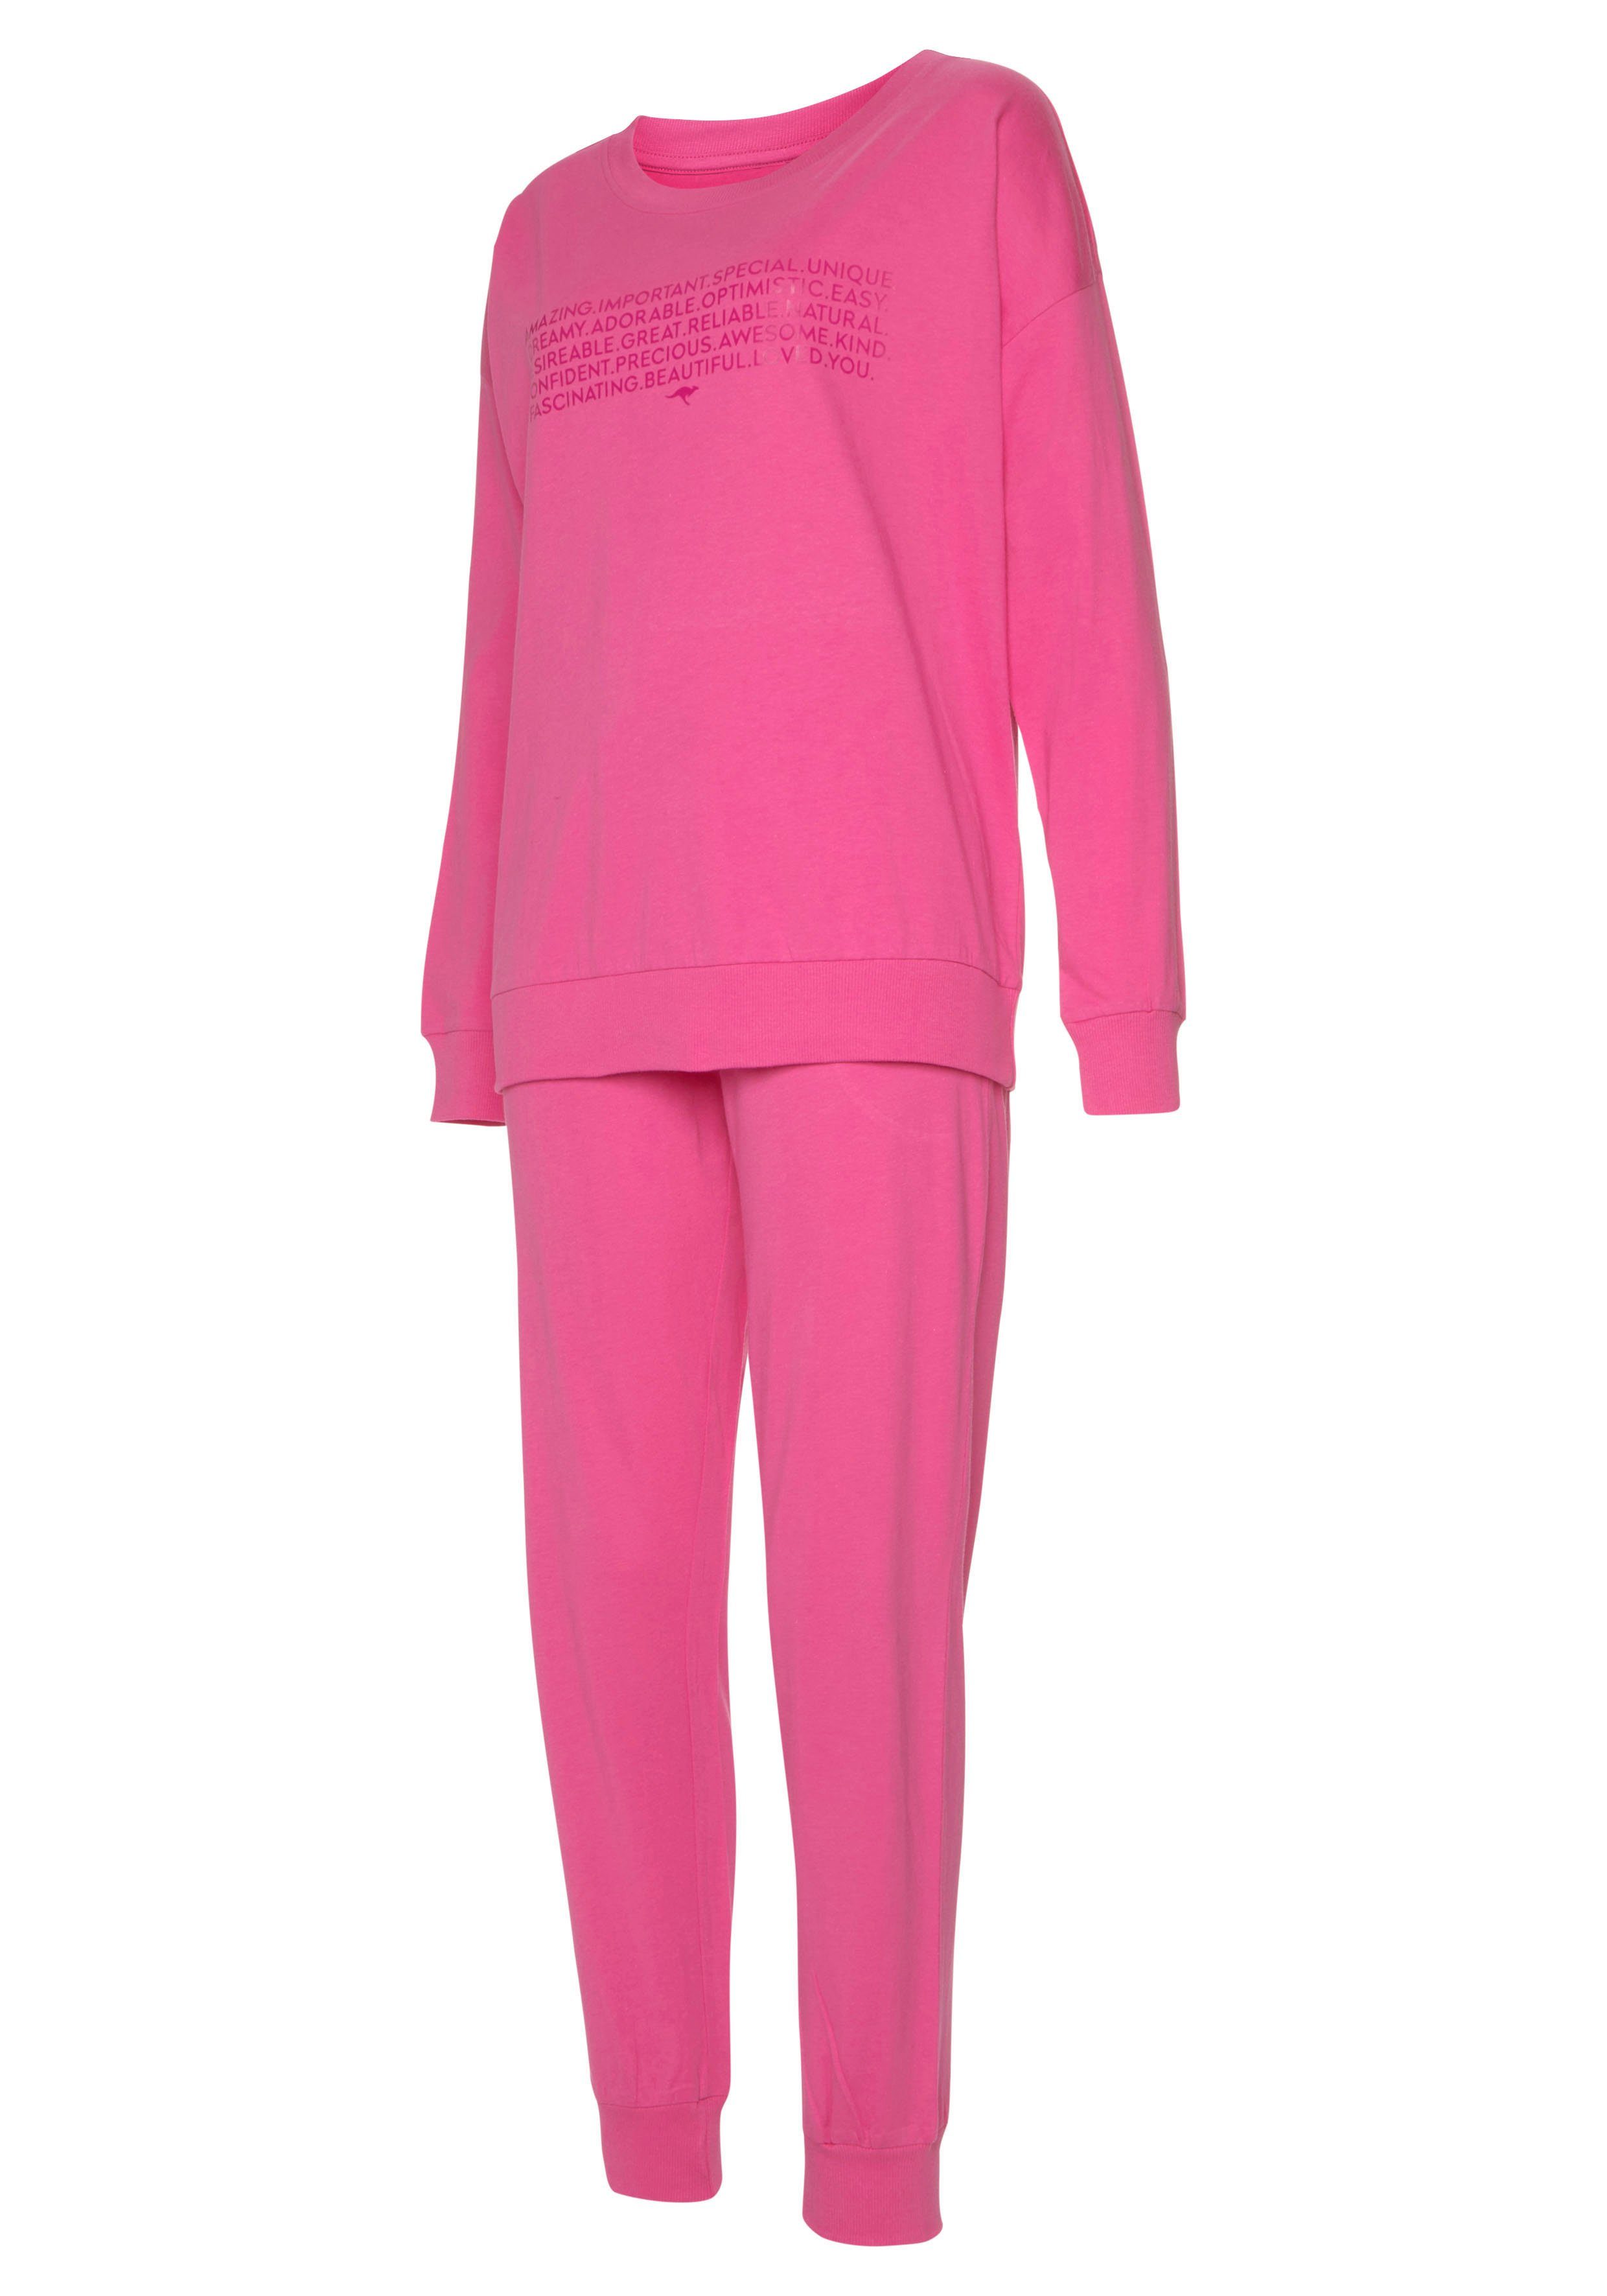 KangaROOS Pyjama (2 1 pink mit tlg., Slogan-Frontdruck Stück)